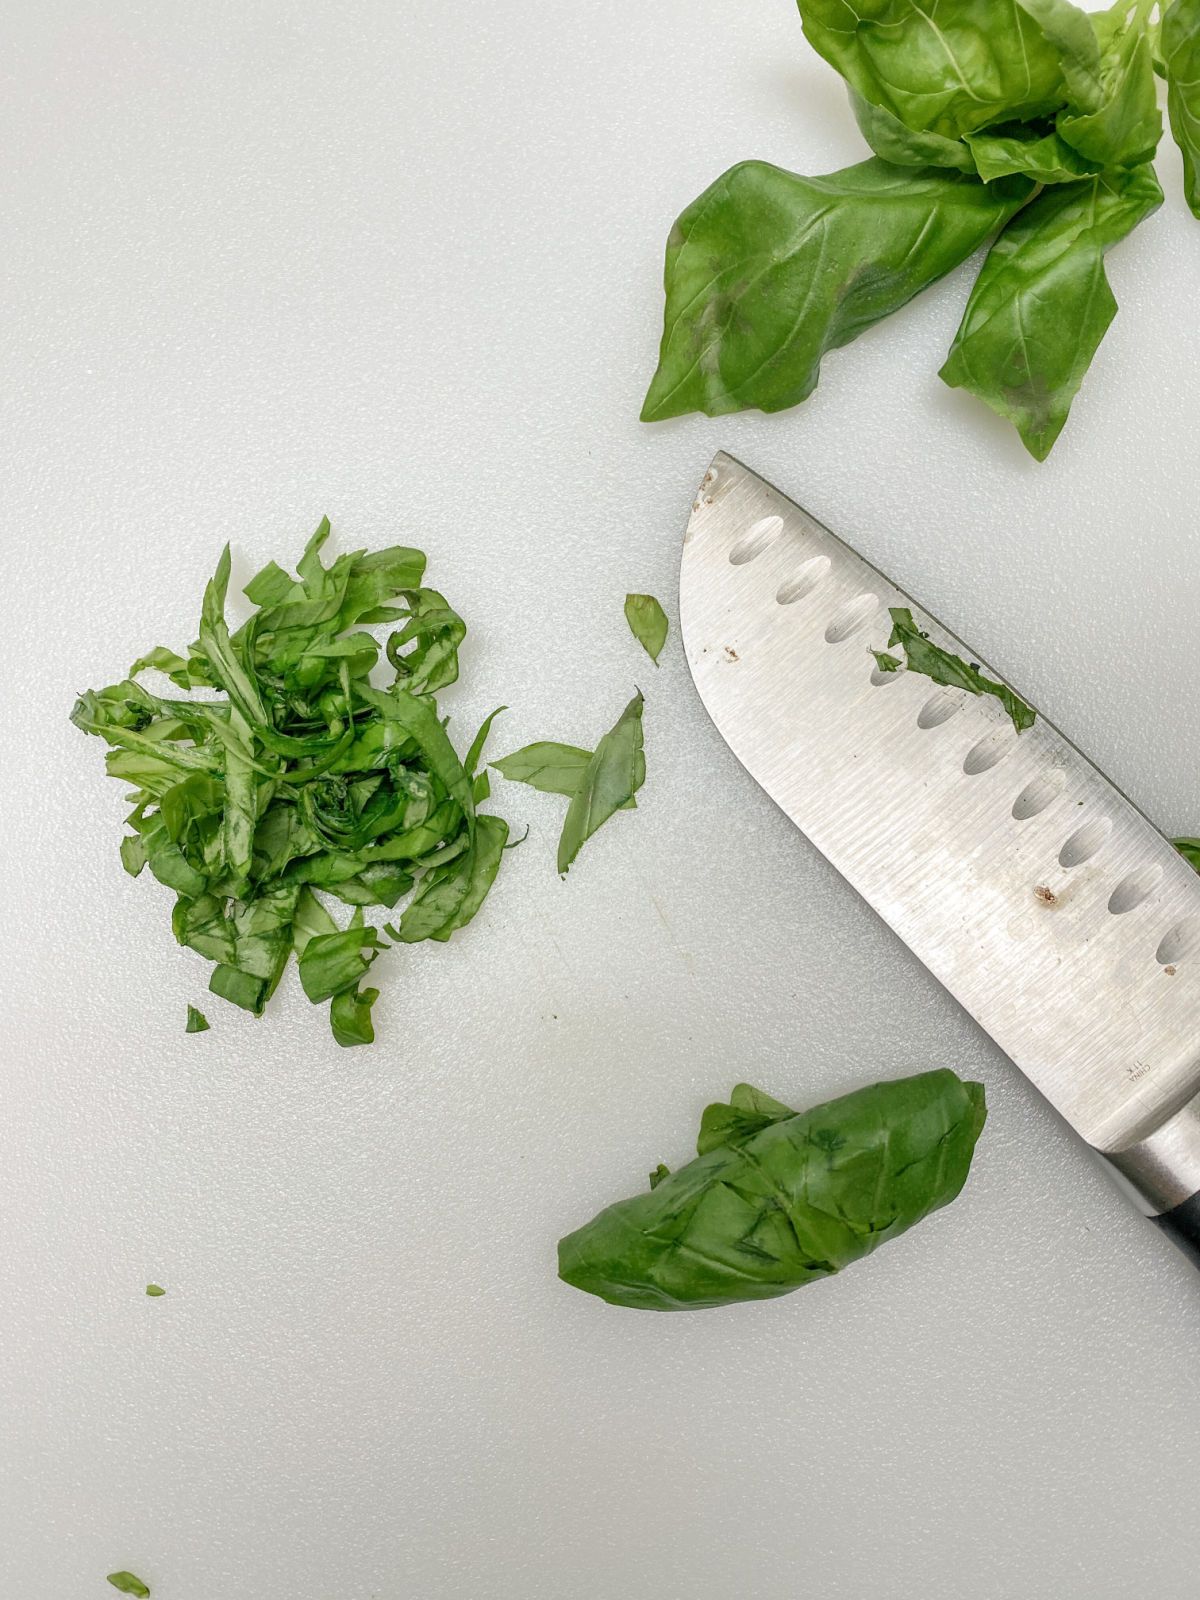 chiffonade basil on cutting board with knife